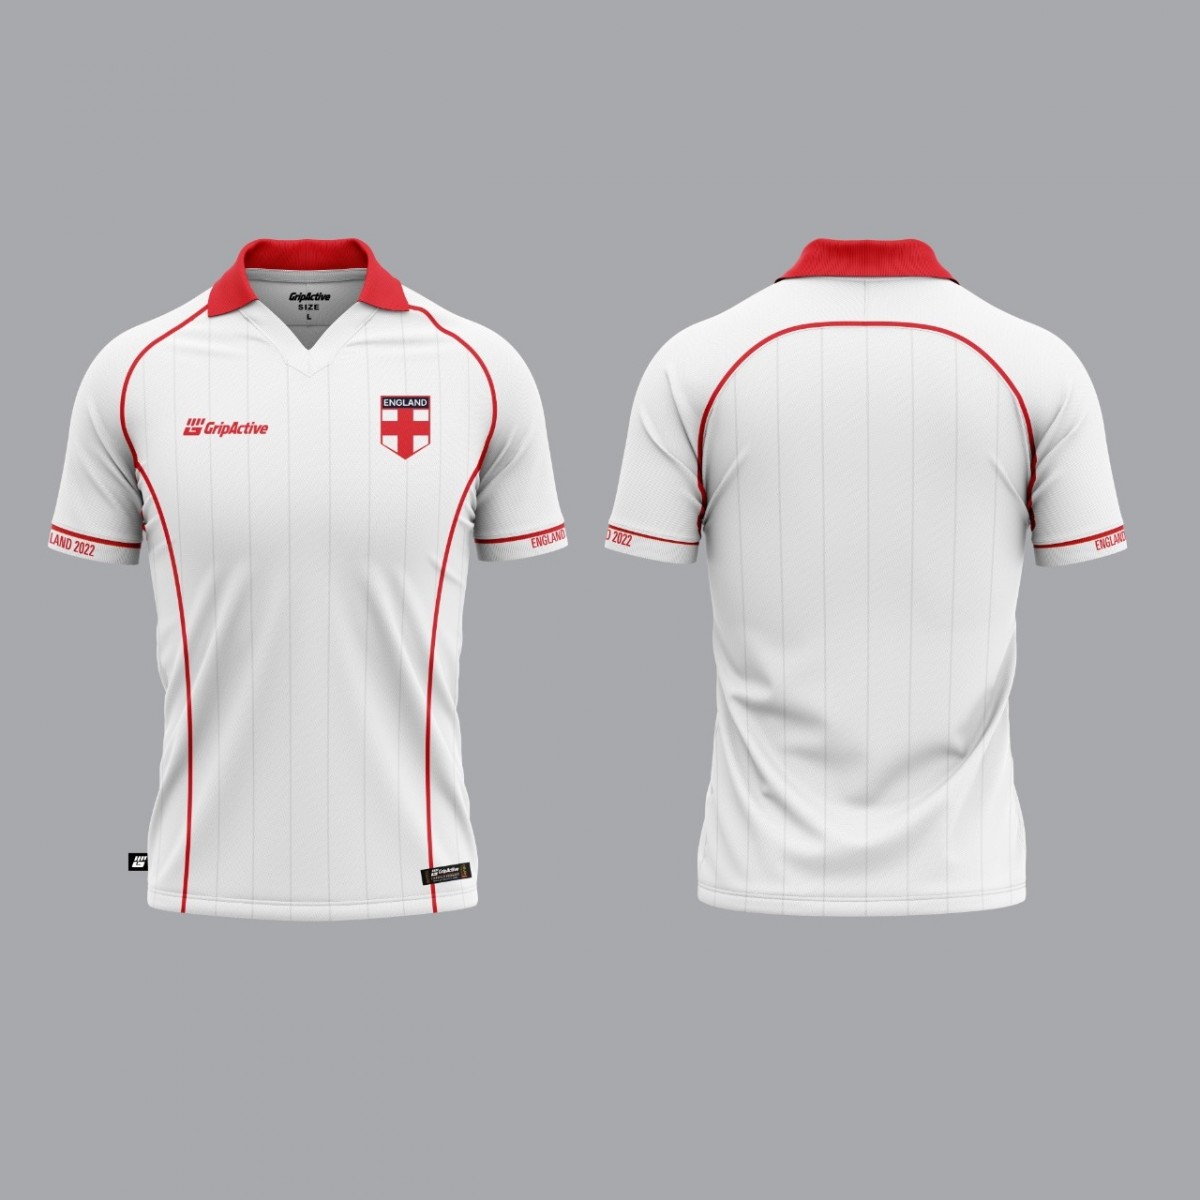 England Team Replica Football Polo Shirt For FIFA World cup 2022 Qatar